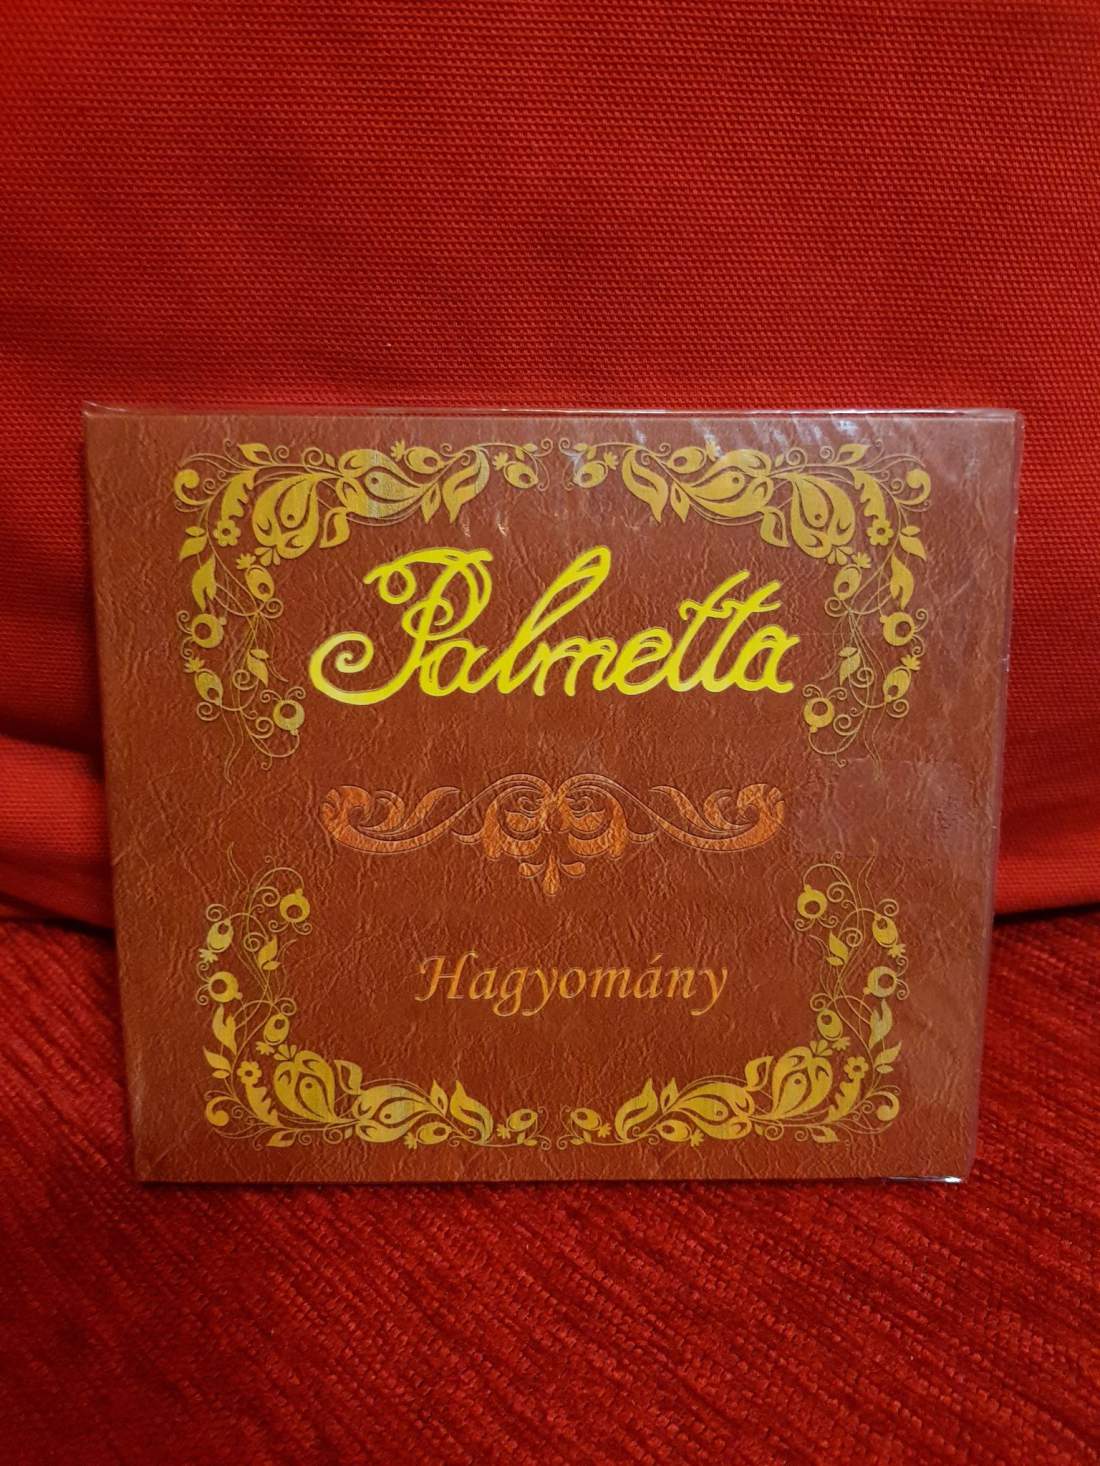 PALMETTA - HAGYOMÁNY CD